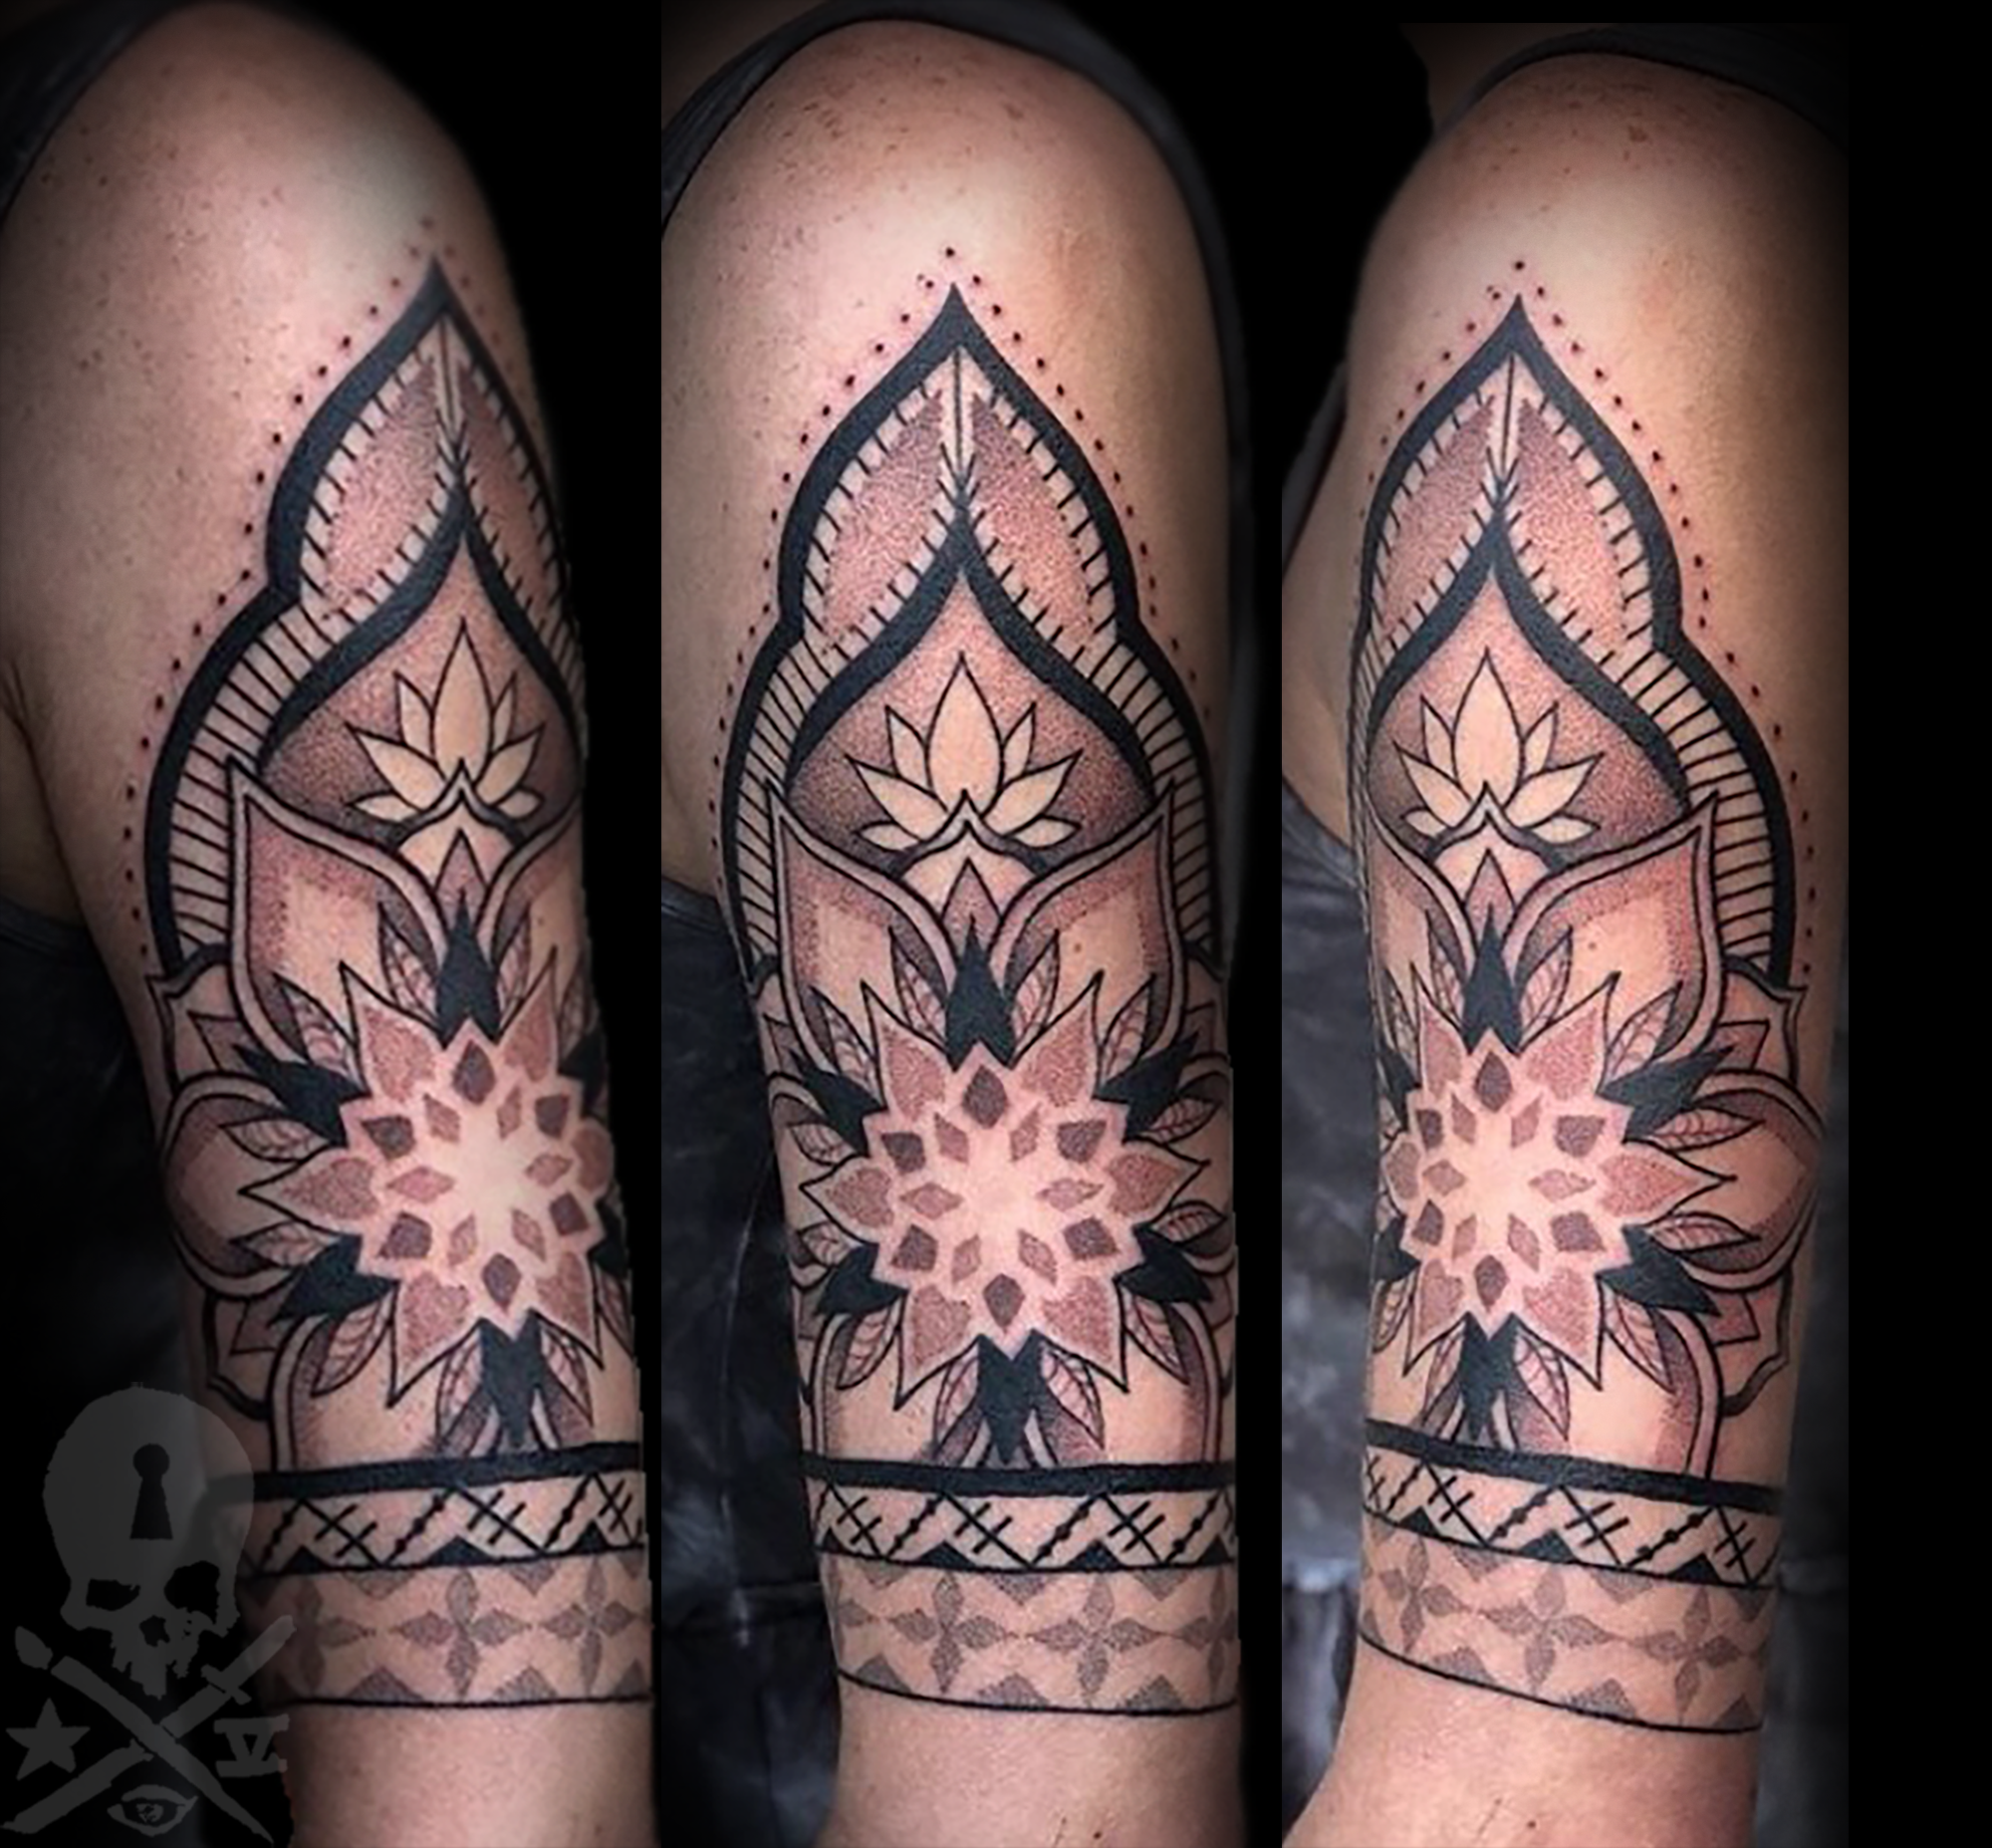 Tattoos - Mandala inspired  - 133829